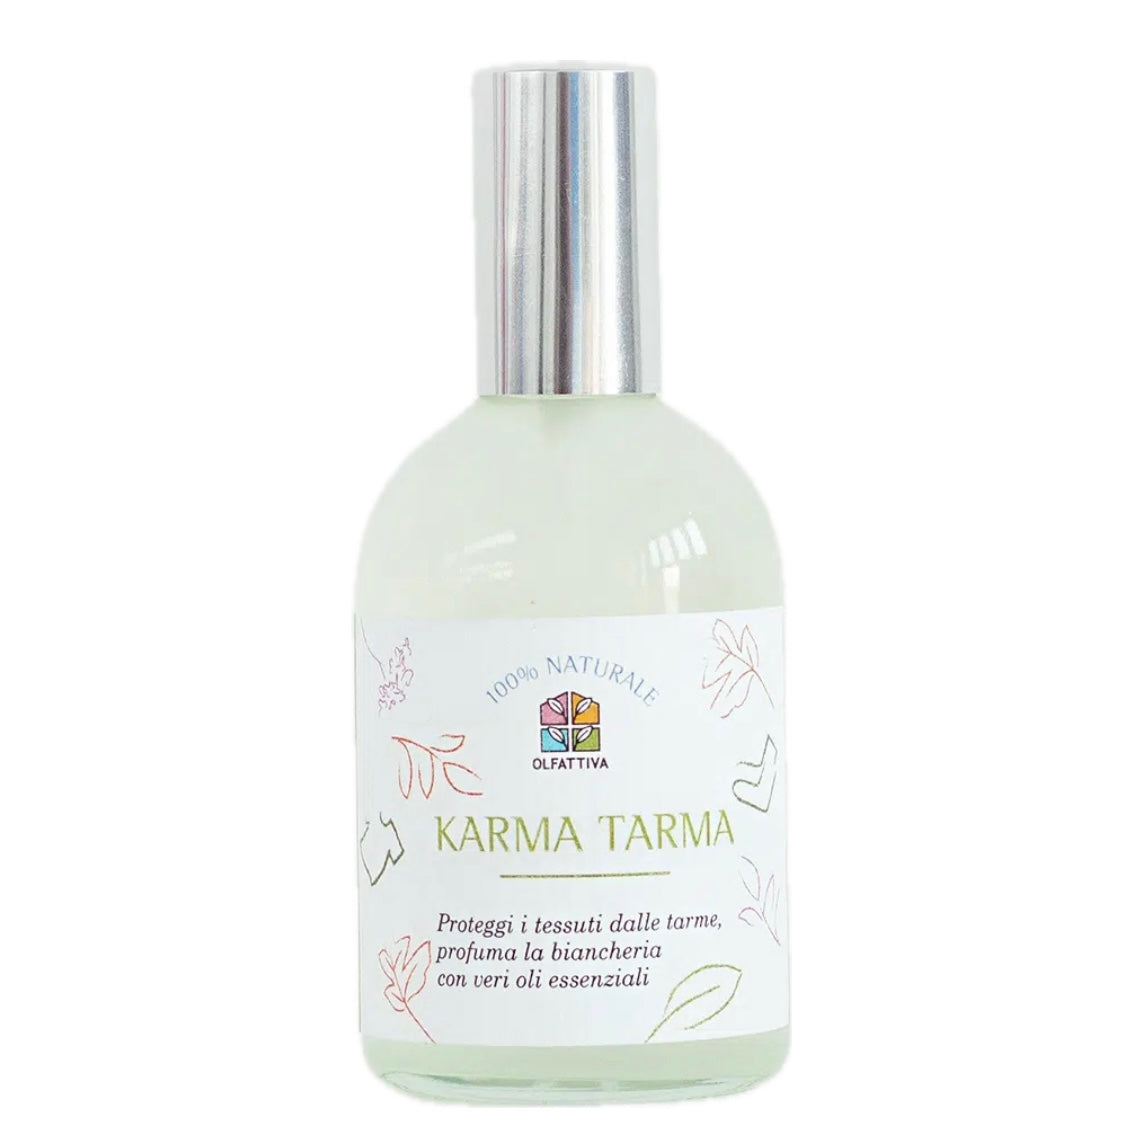 Olfattiva Karma Tarma spray 115ml - Proteggi tessuti dalle tarme e profuma la biancheria con veri oli essenziali